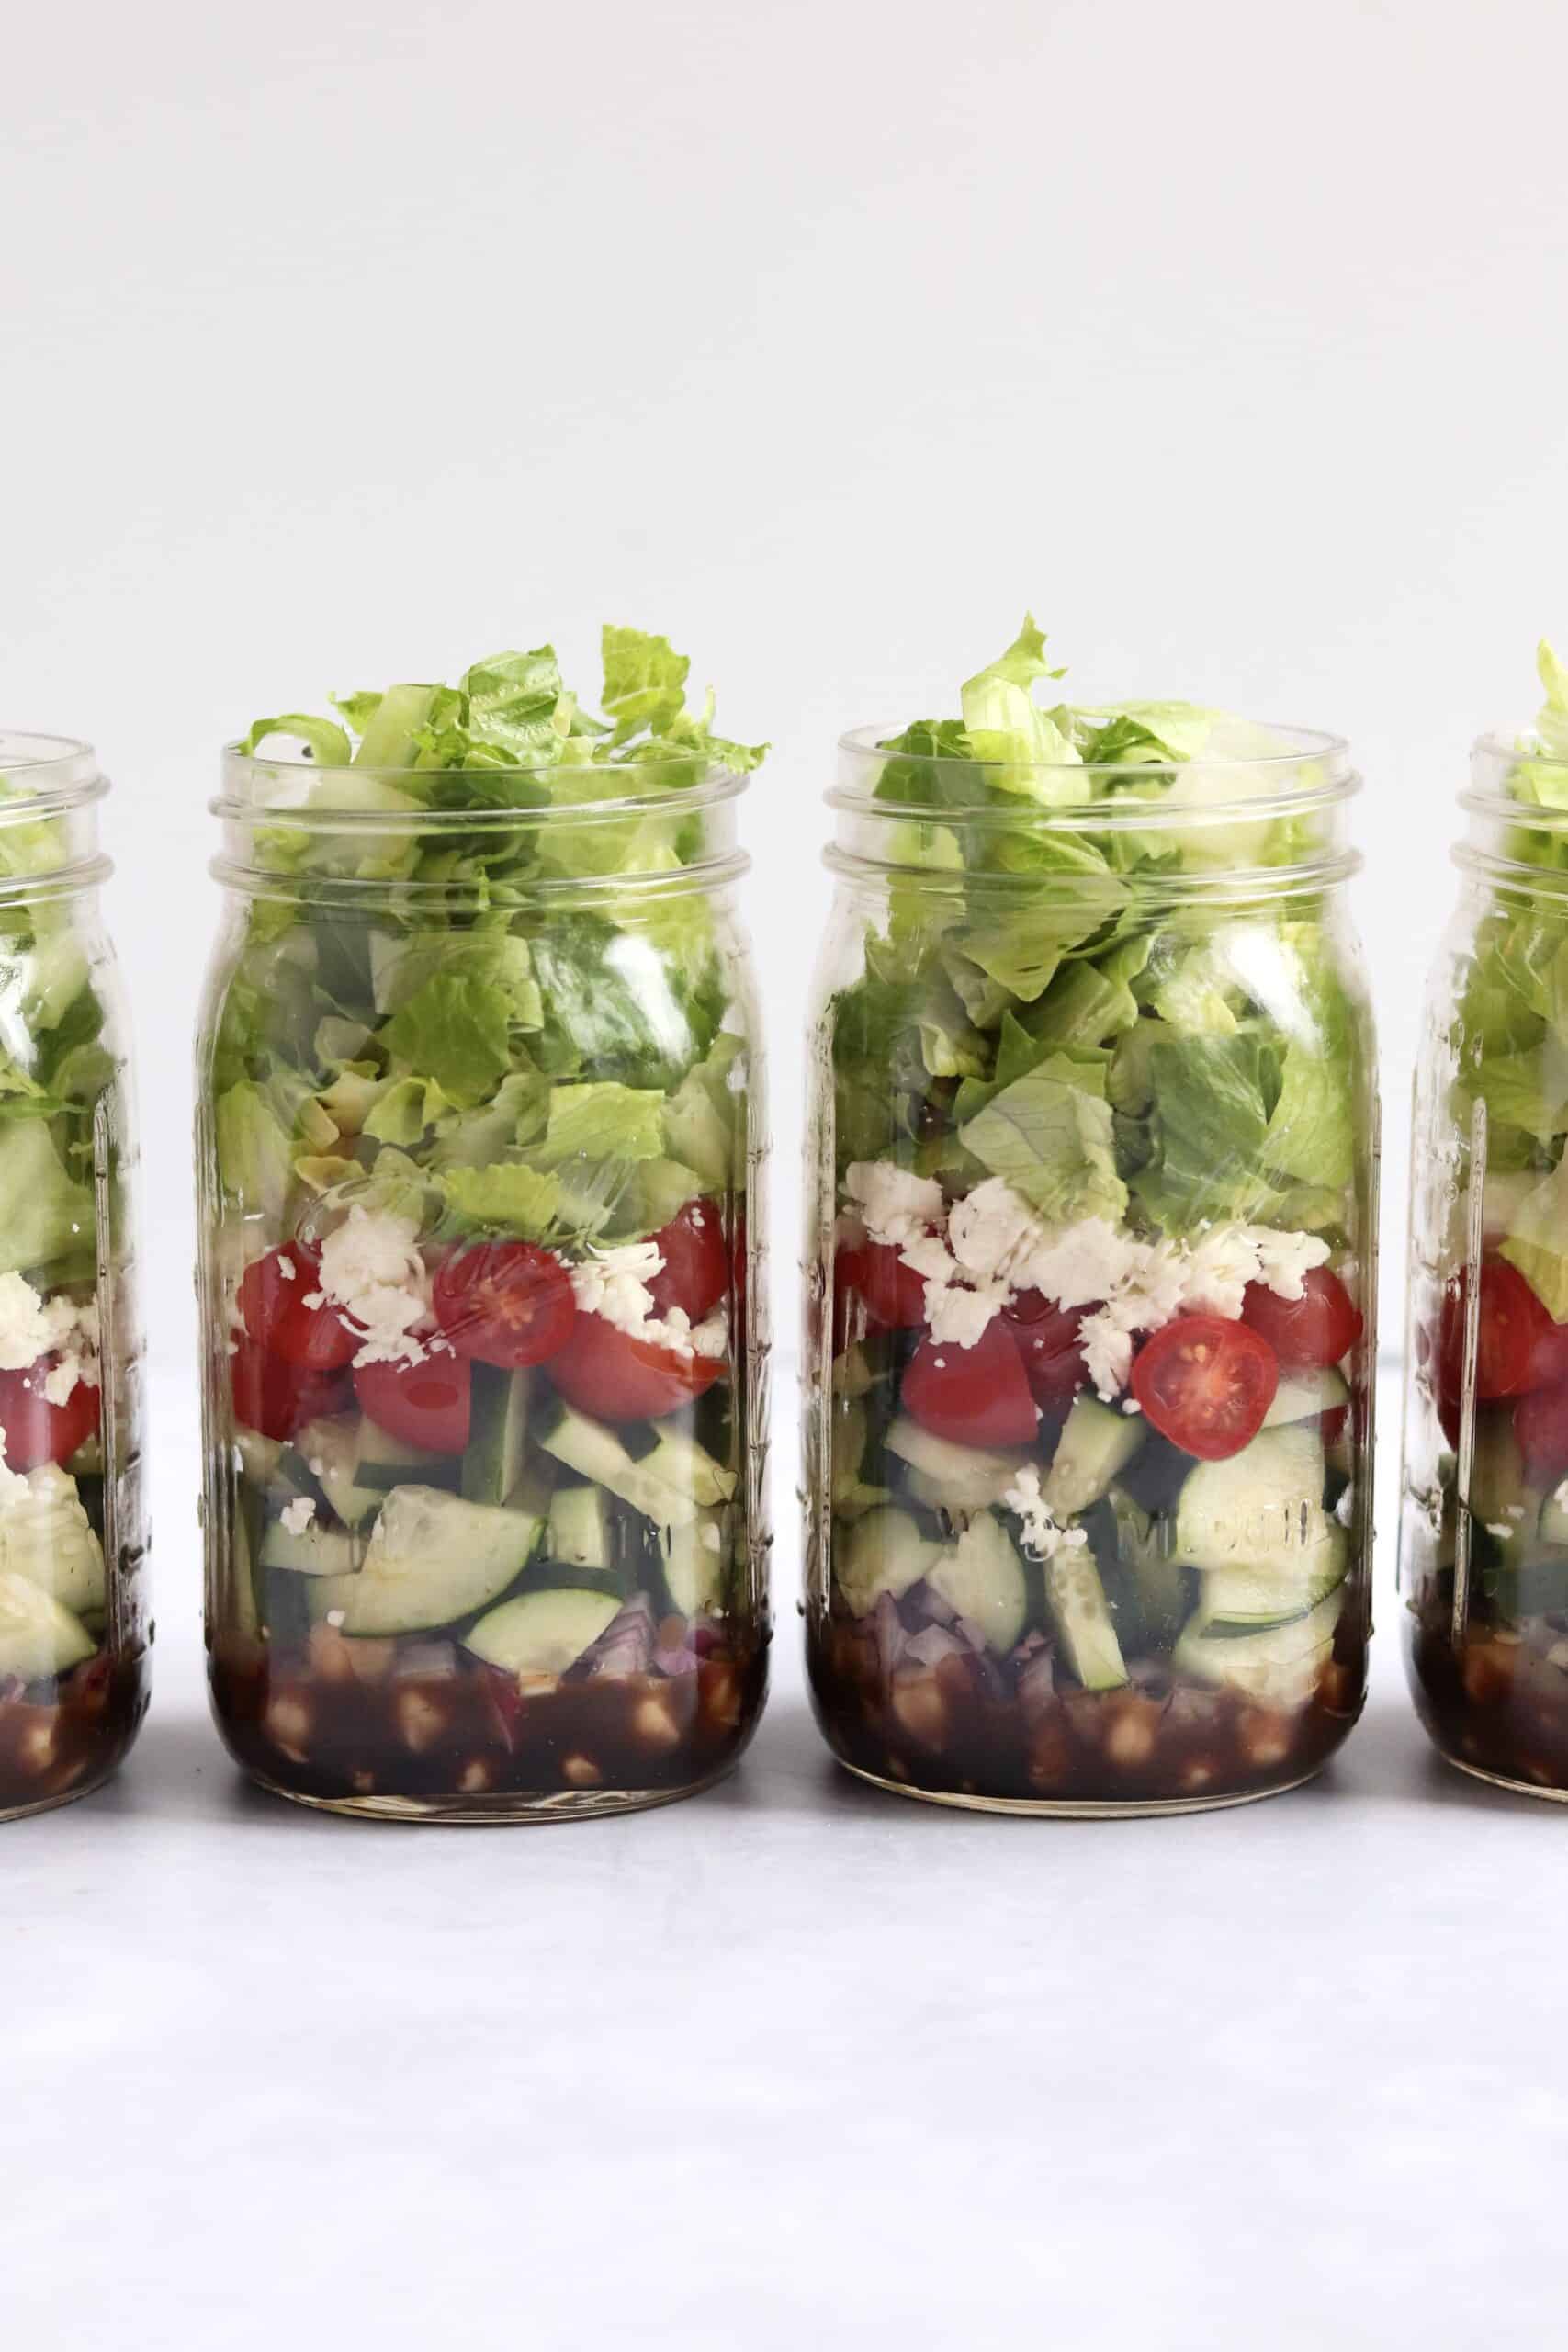 Mason Jar Salad Recipe  Easy Deconstructed Banh Mi Salad